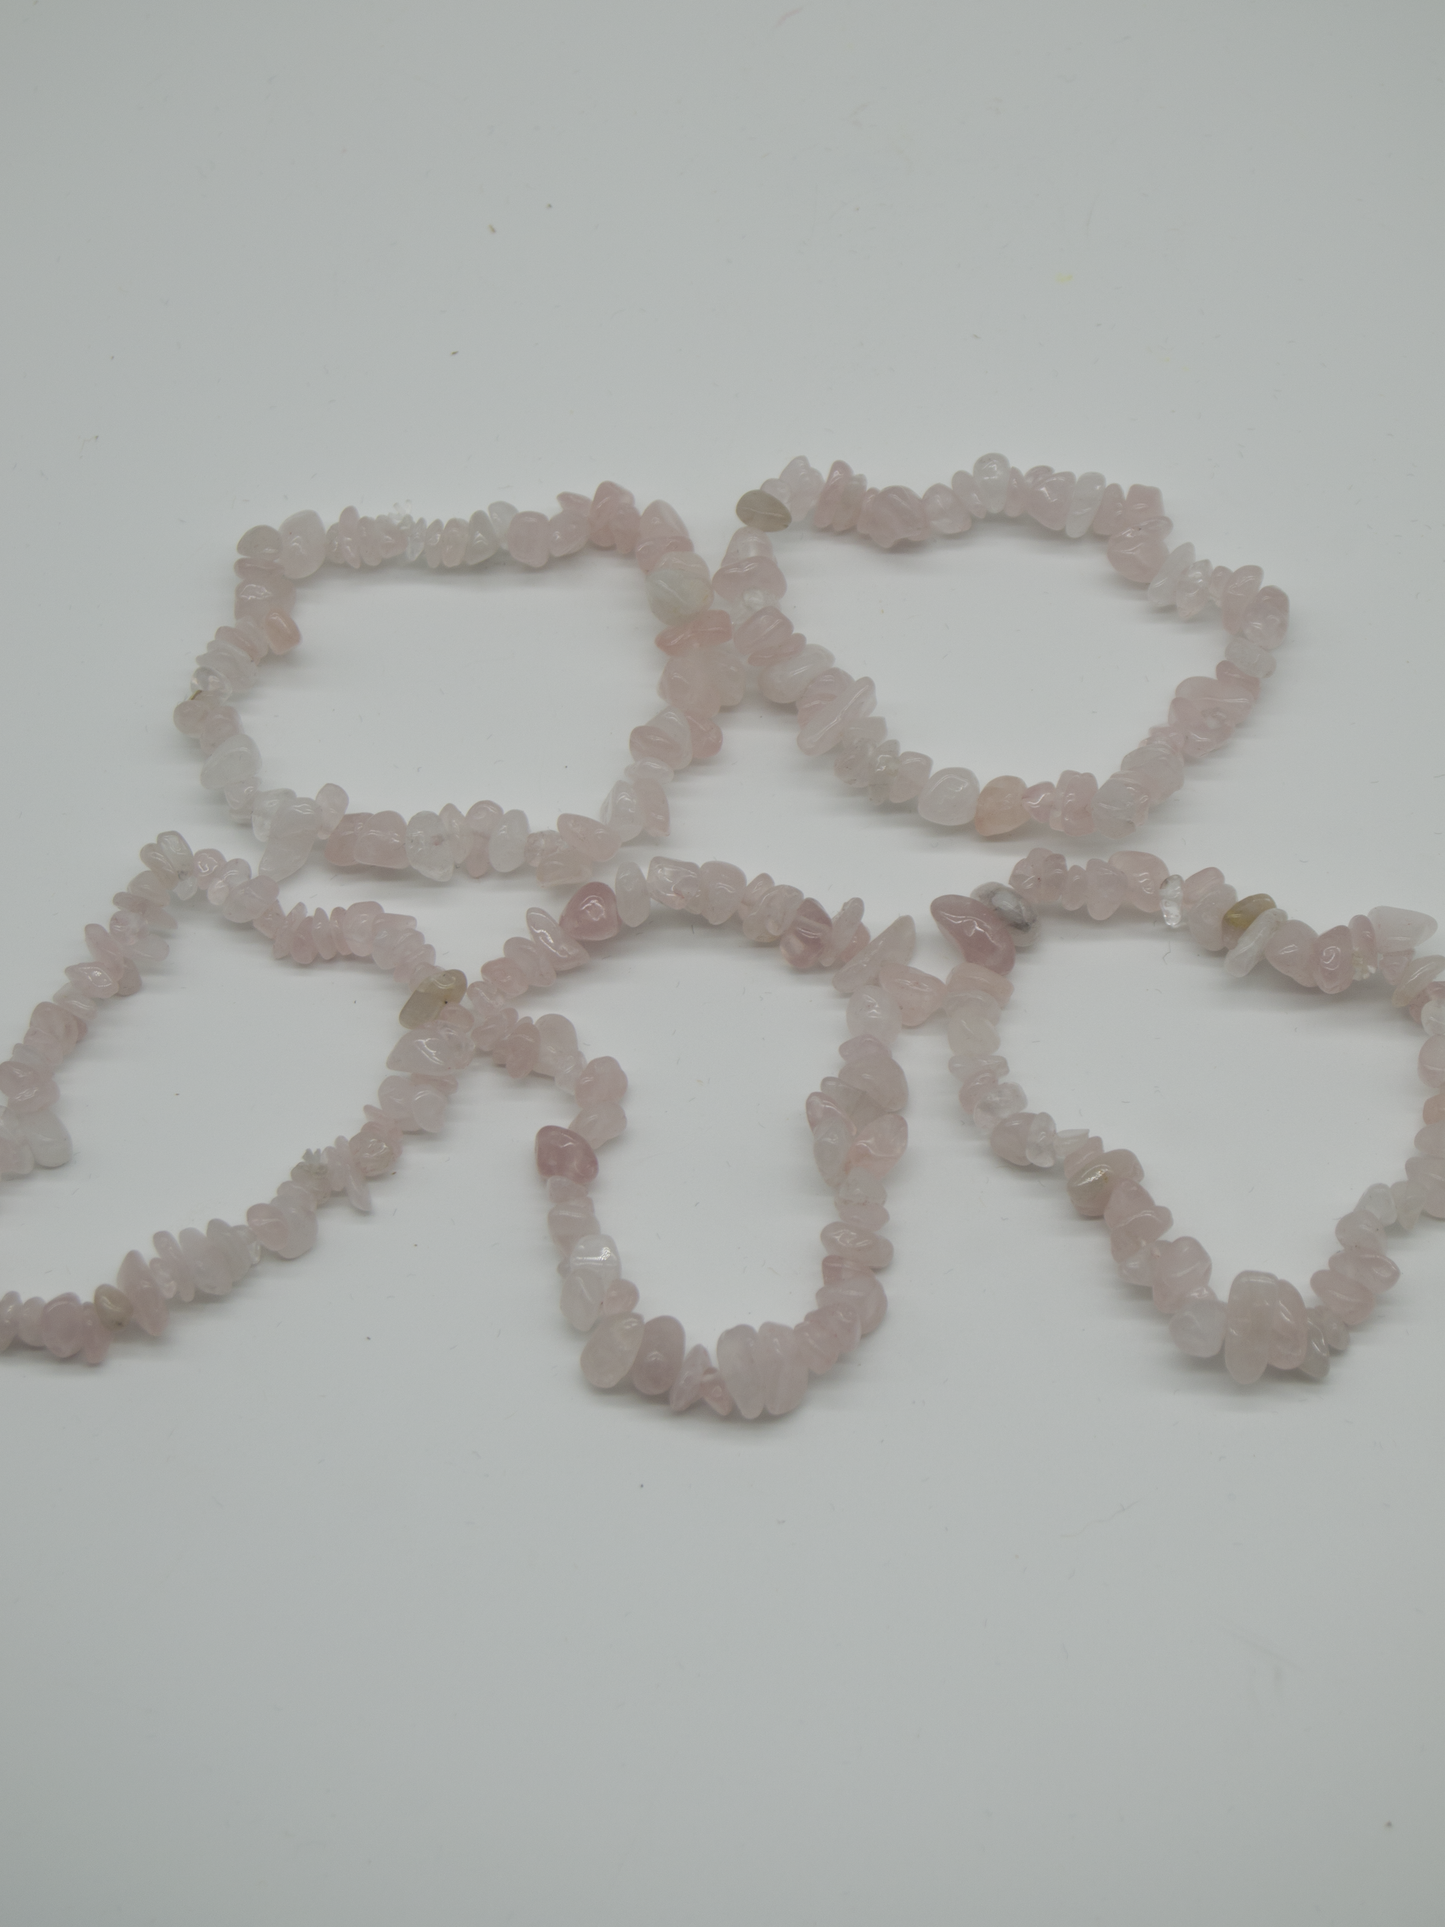 Bracelet : Tumbled Stones Rose Quartz Chips